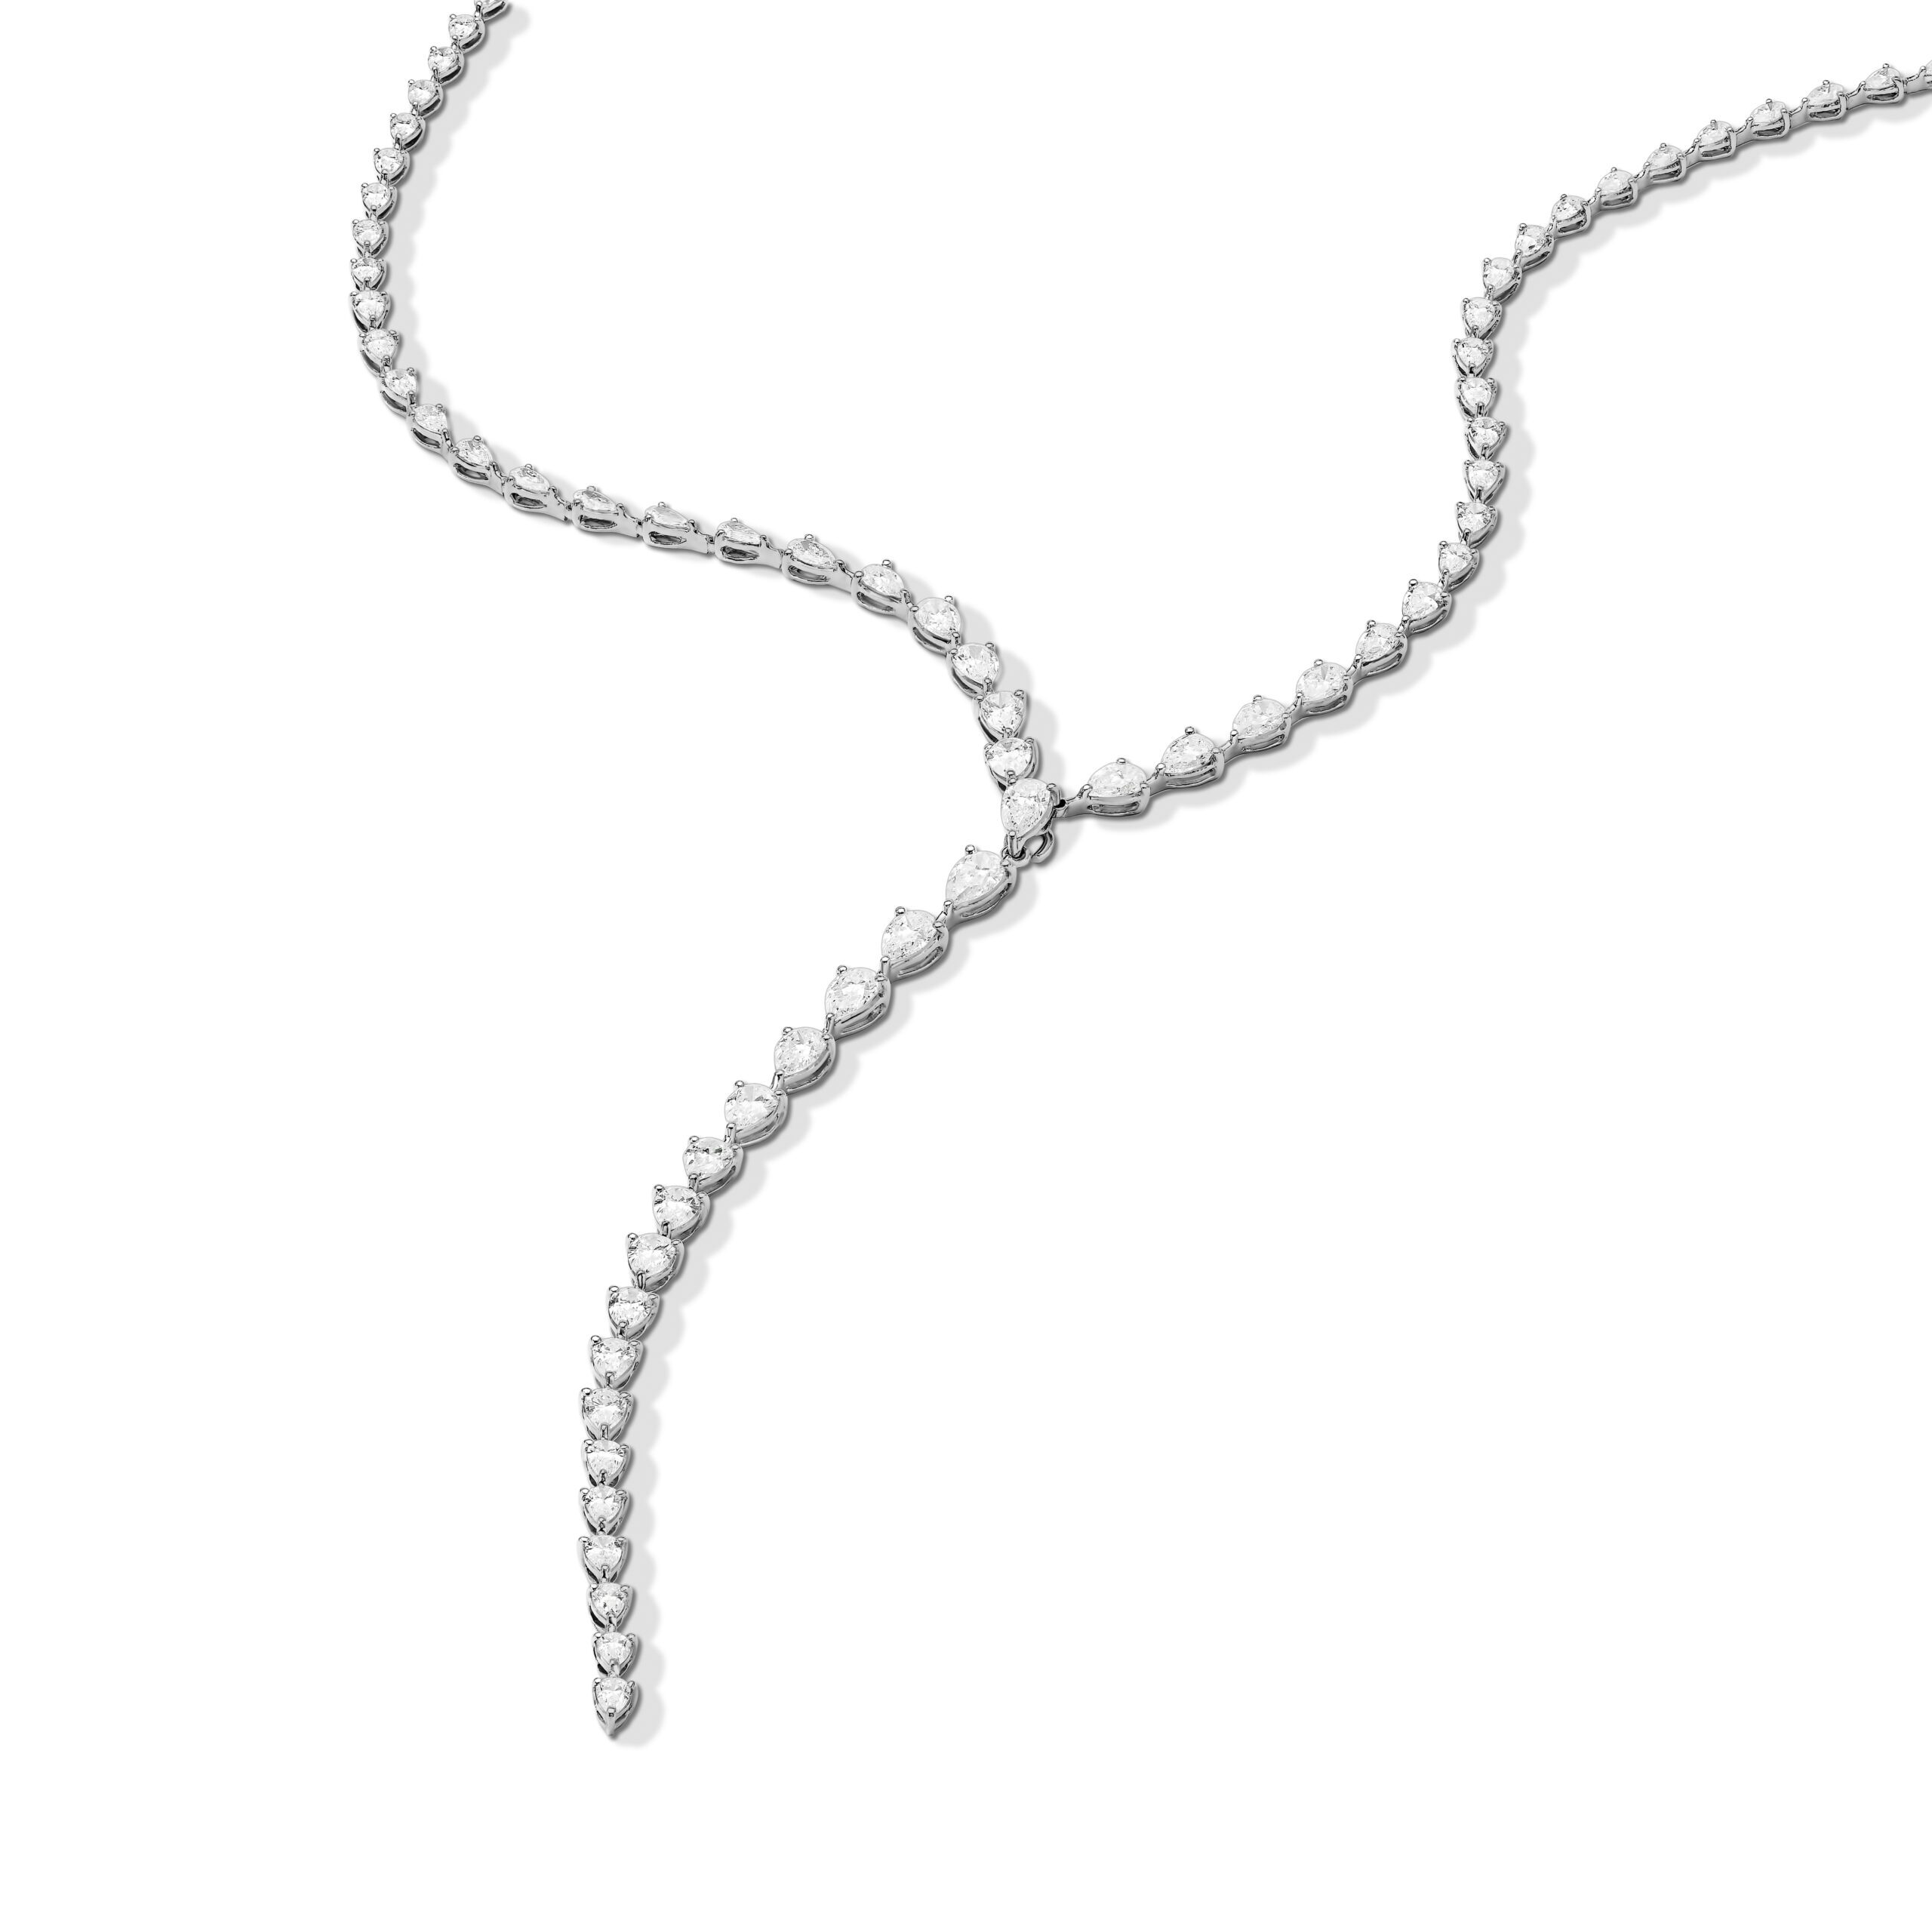 Diamond necklace tranformer #2